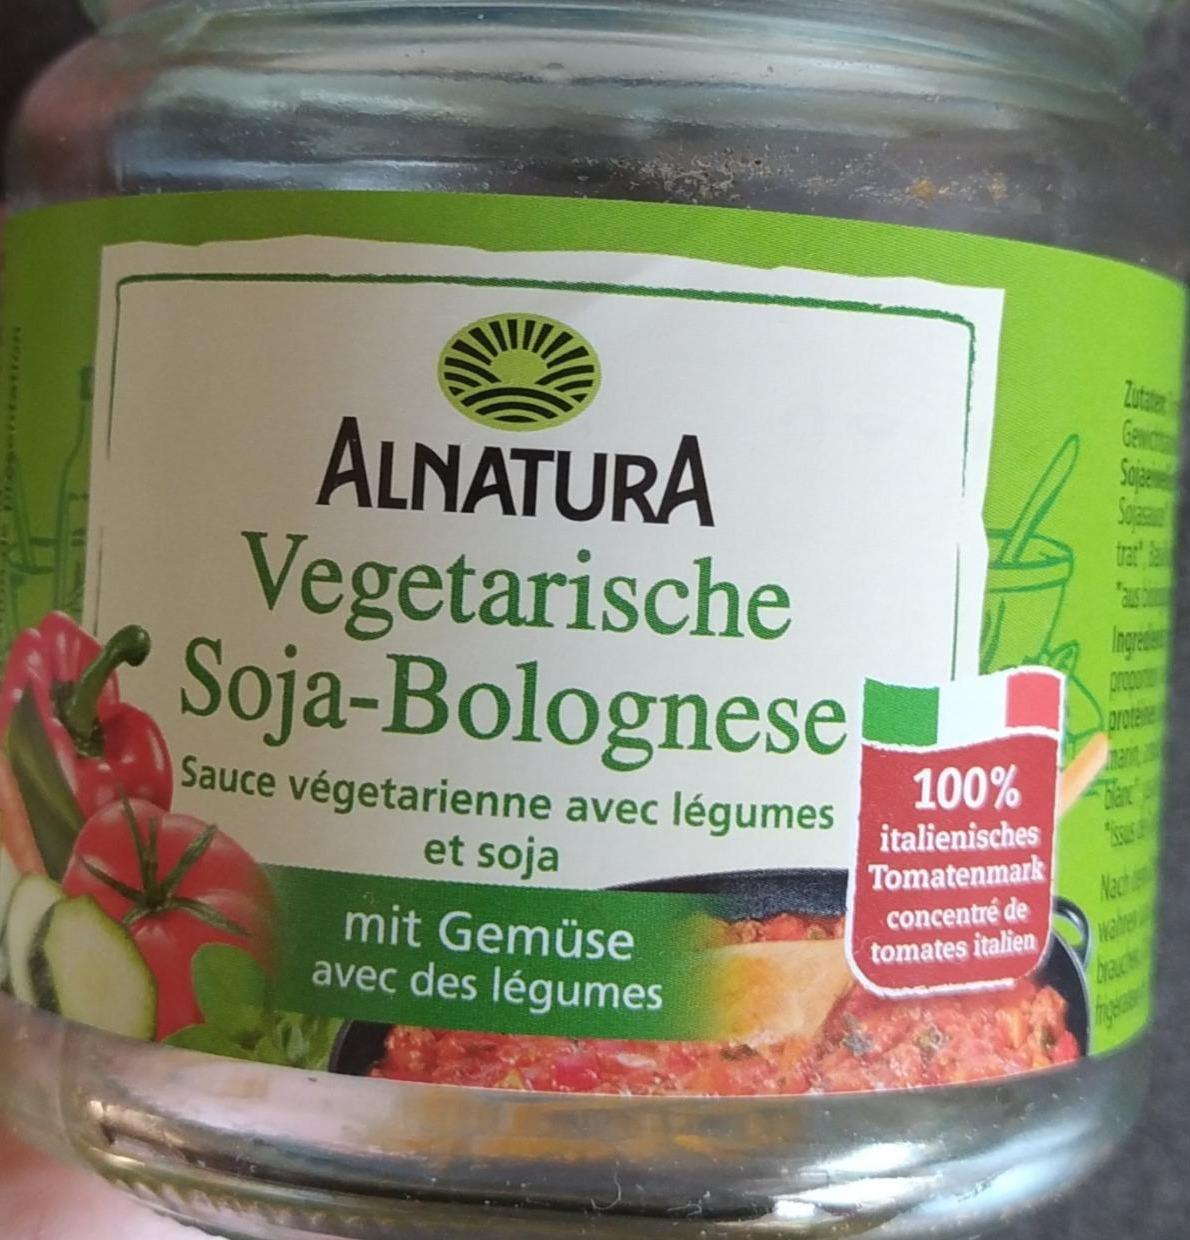 Képek - Vegetarische soja-bolognese Alnatura